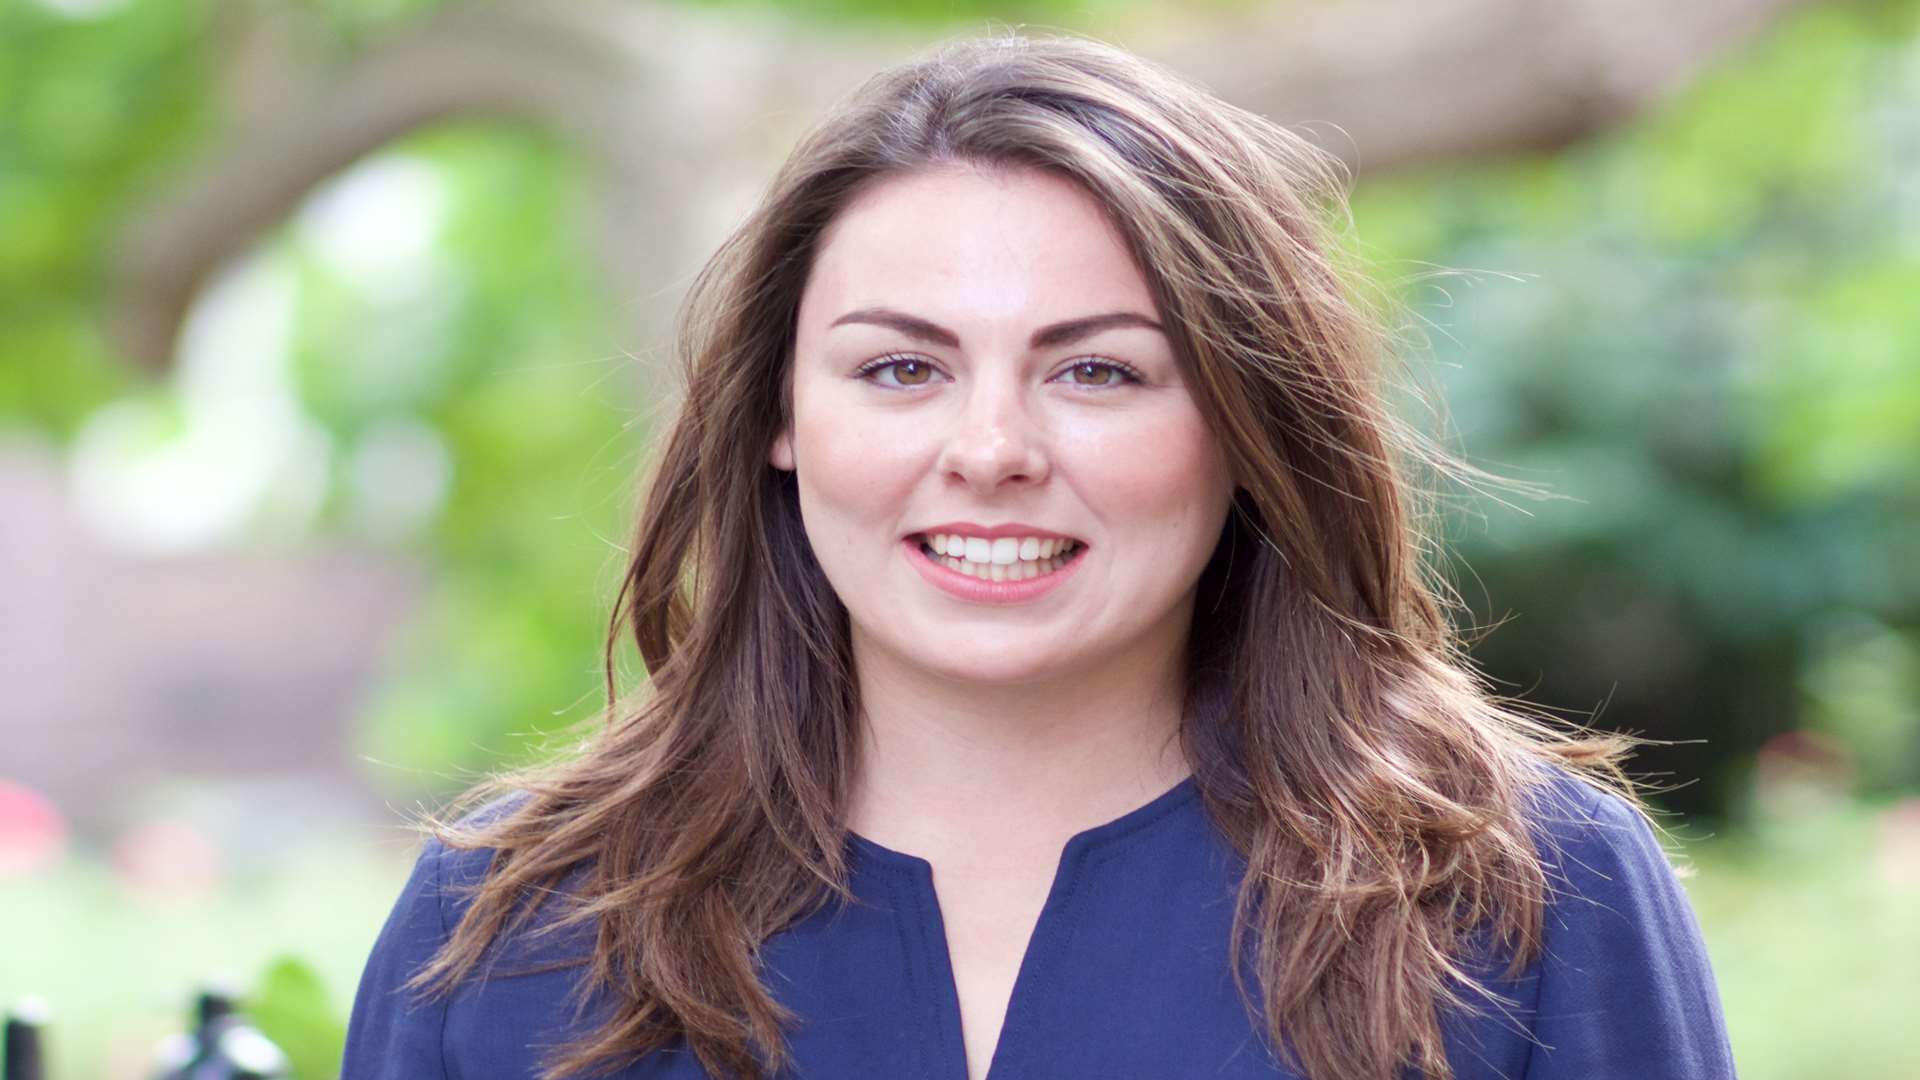 Lib Dem Prospective Parliamentary Candidate Emily Fermor